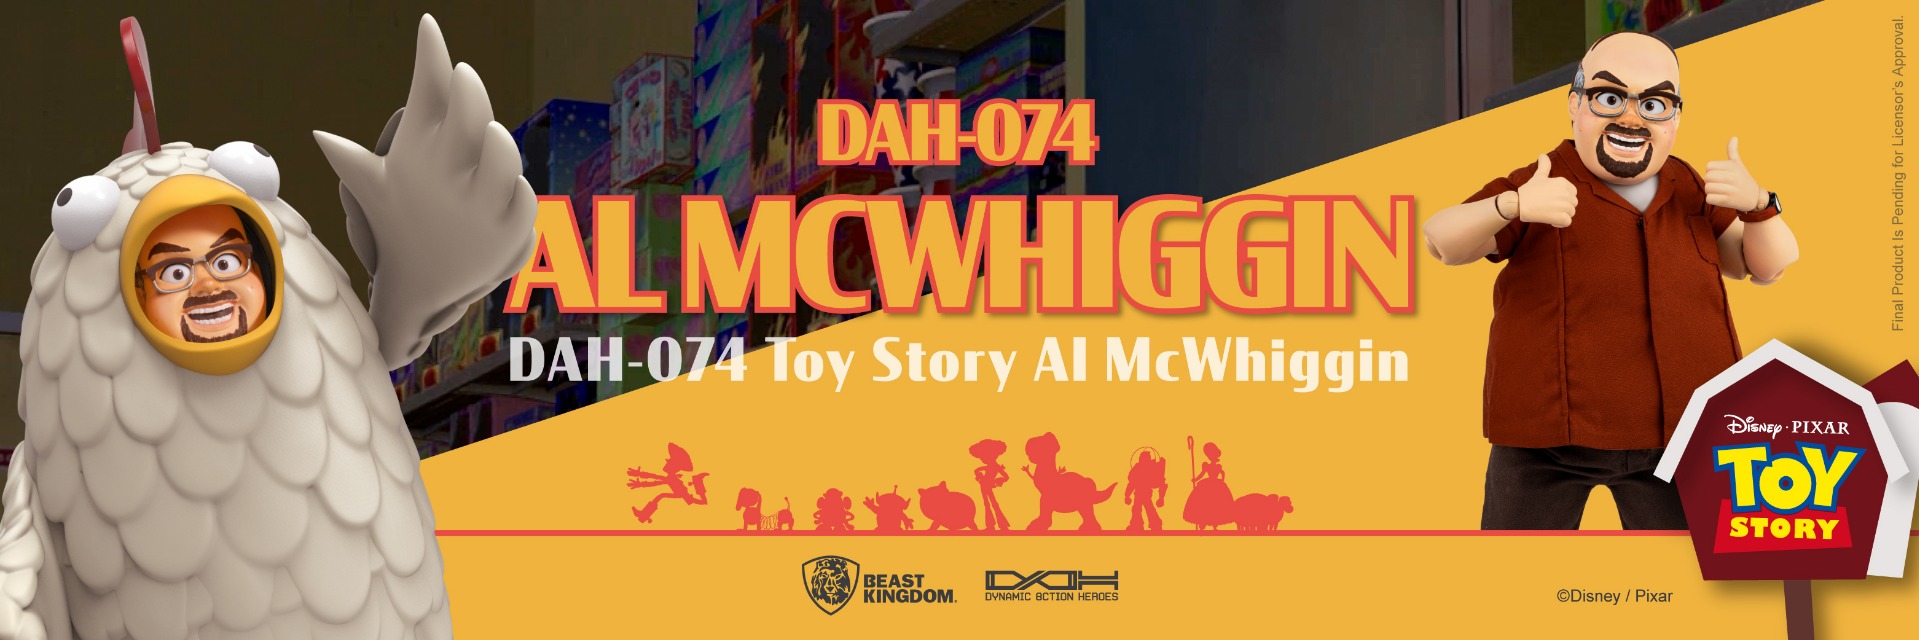 DAH-074 Toy Story 2 Al McWhiggin